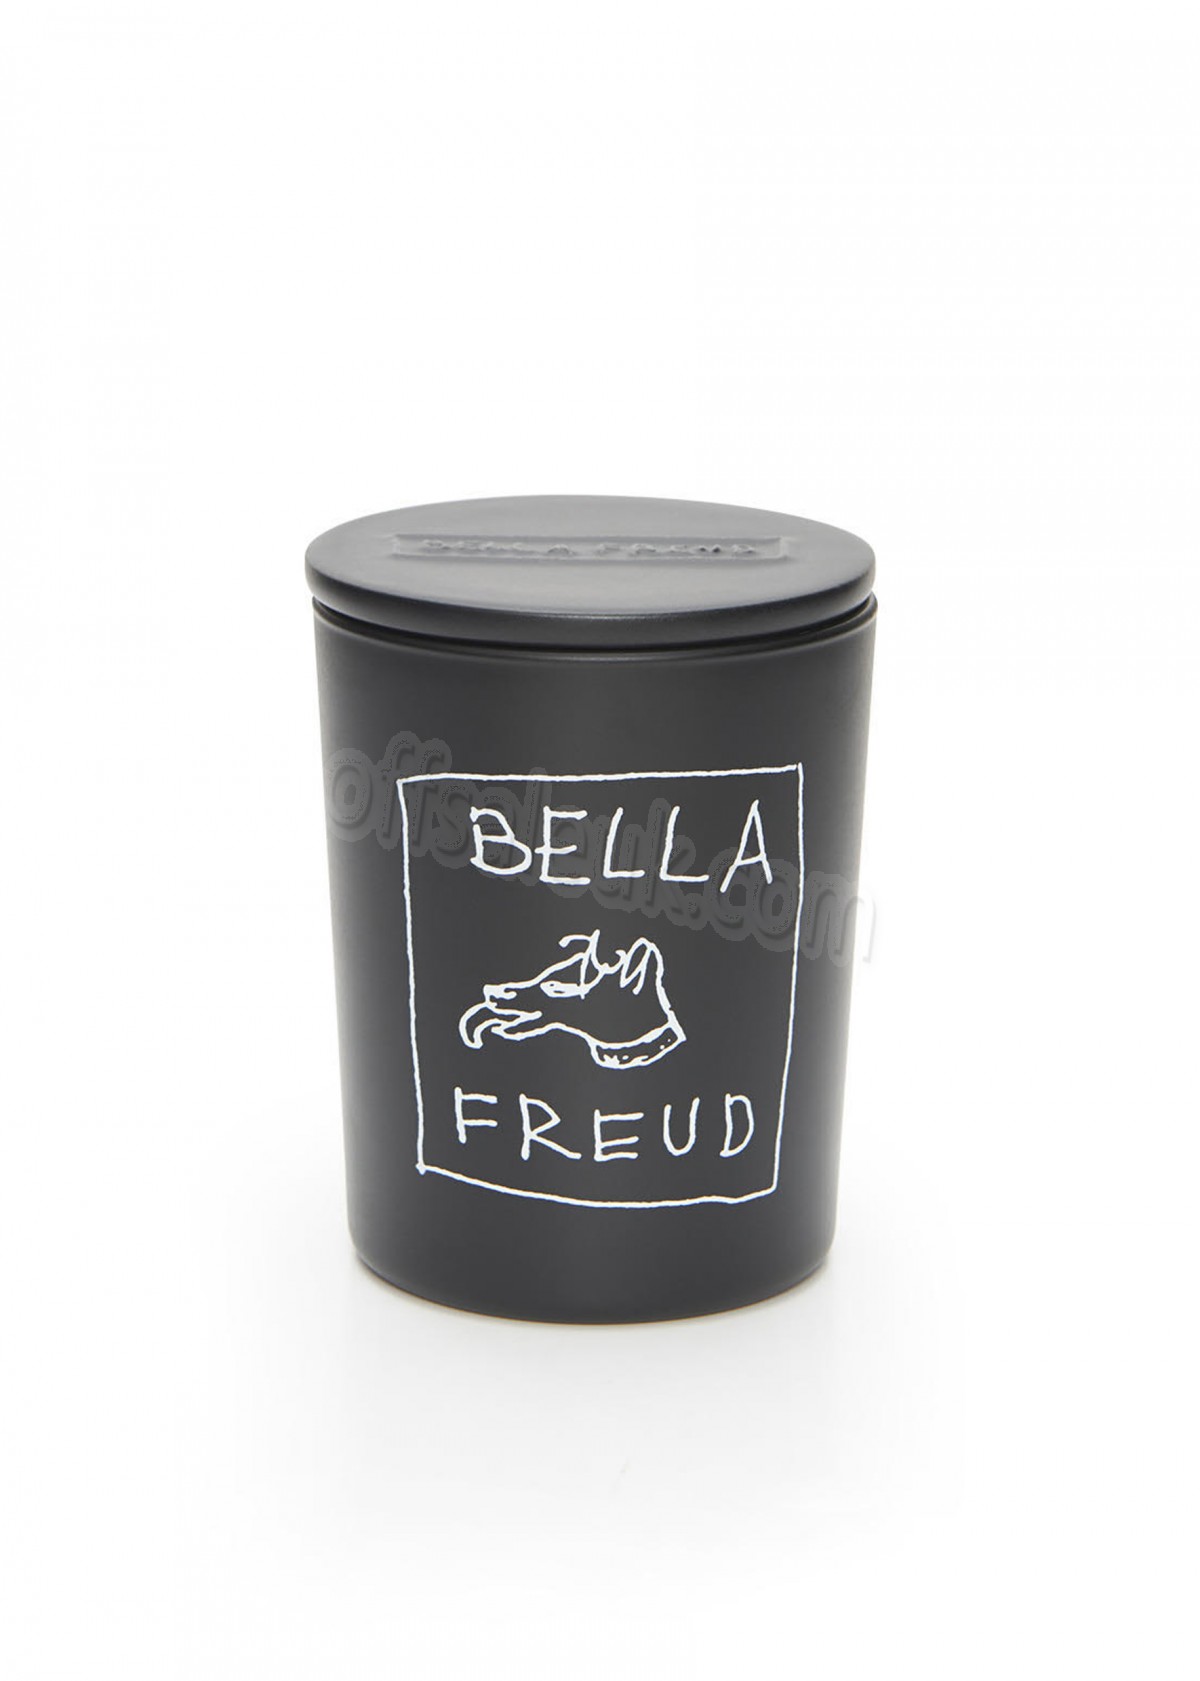 Cheap Bella Freud Signature Candle - -1